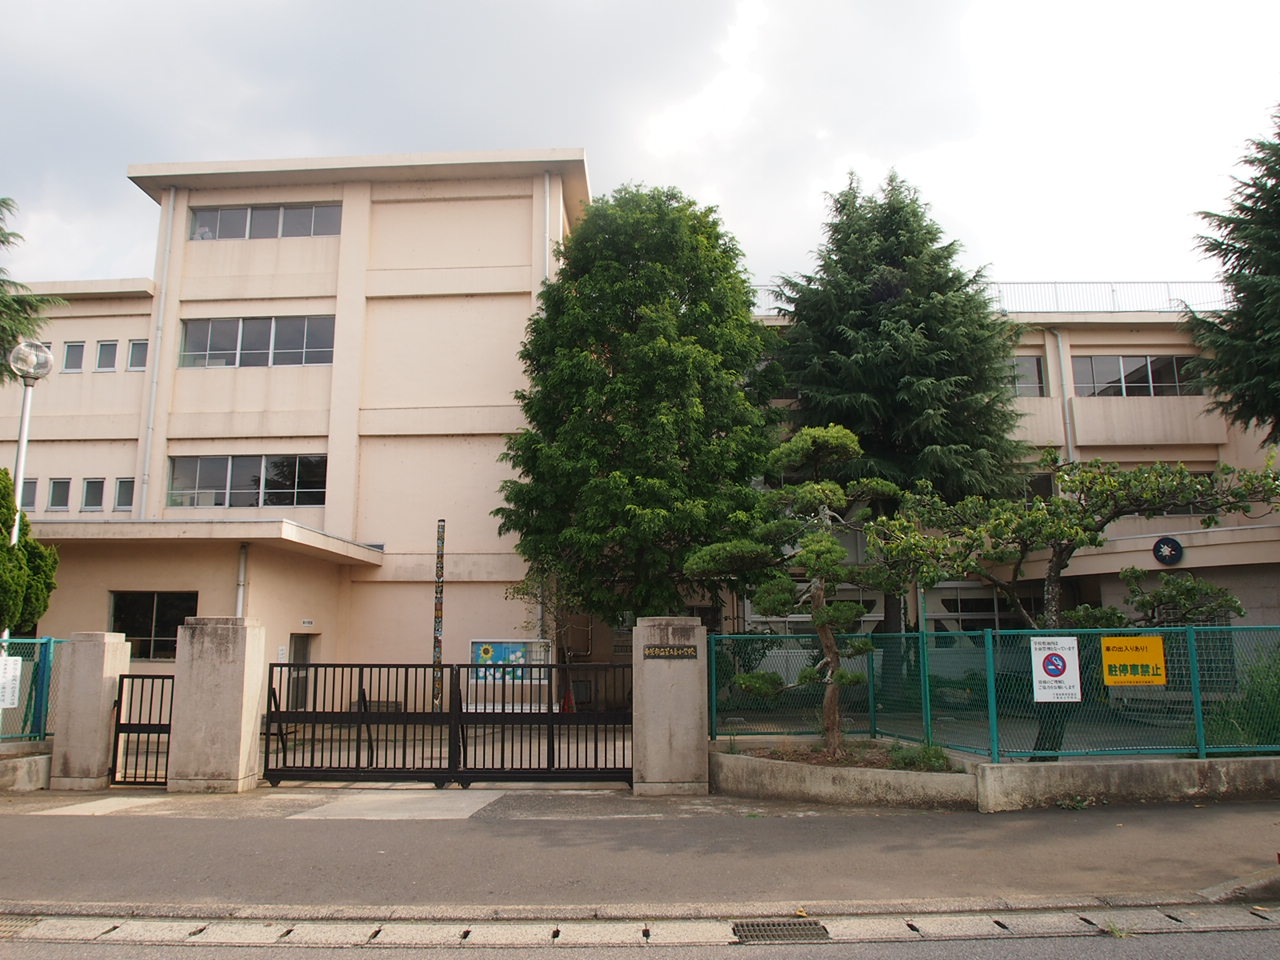 Primary school. Hoshiguki up to elementary school (elementary school) 1051m